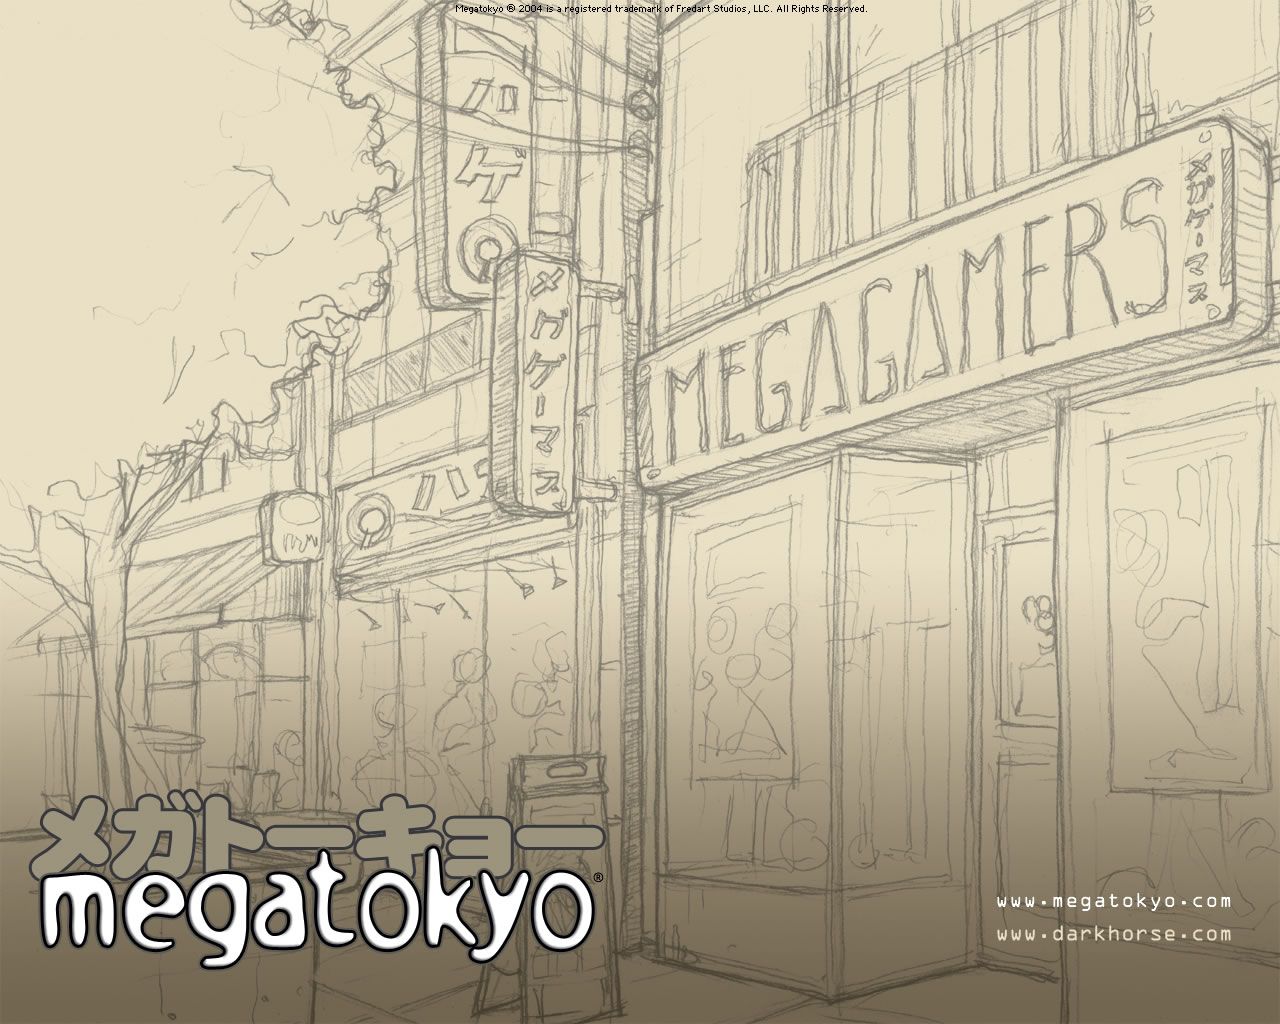 Megatokyo - Desktops - Dark Horse Comics